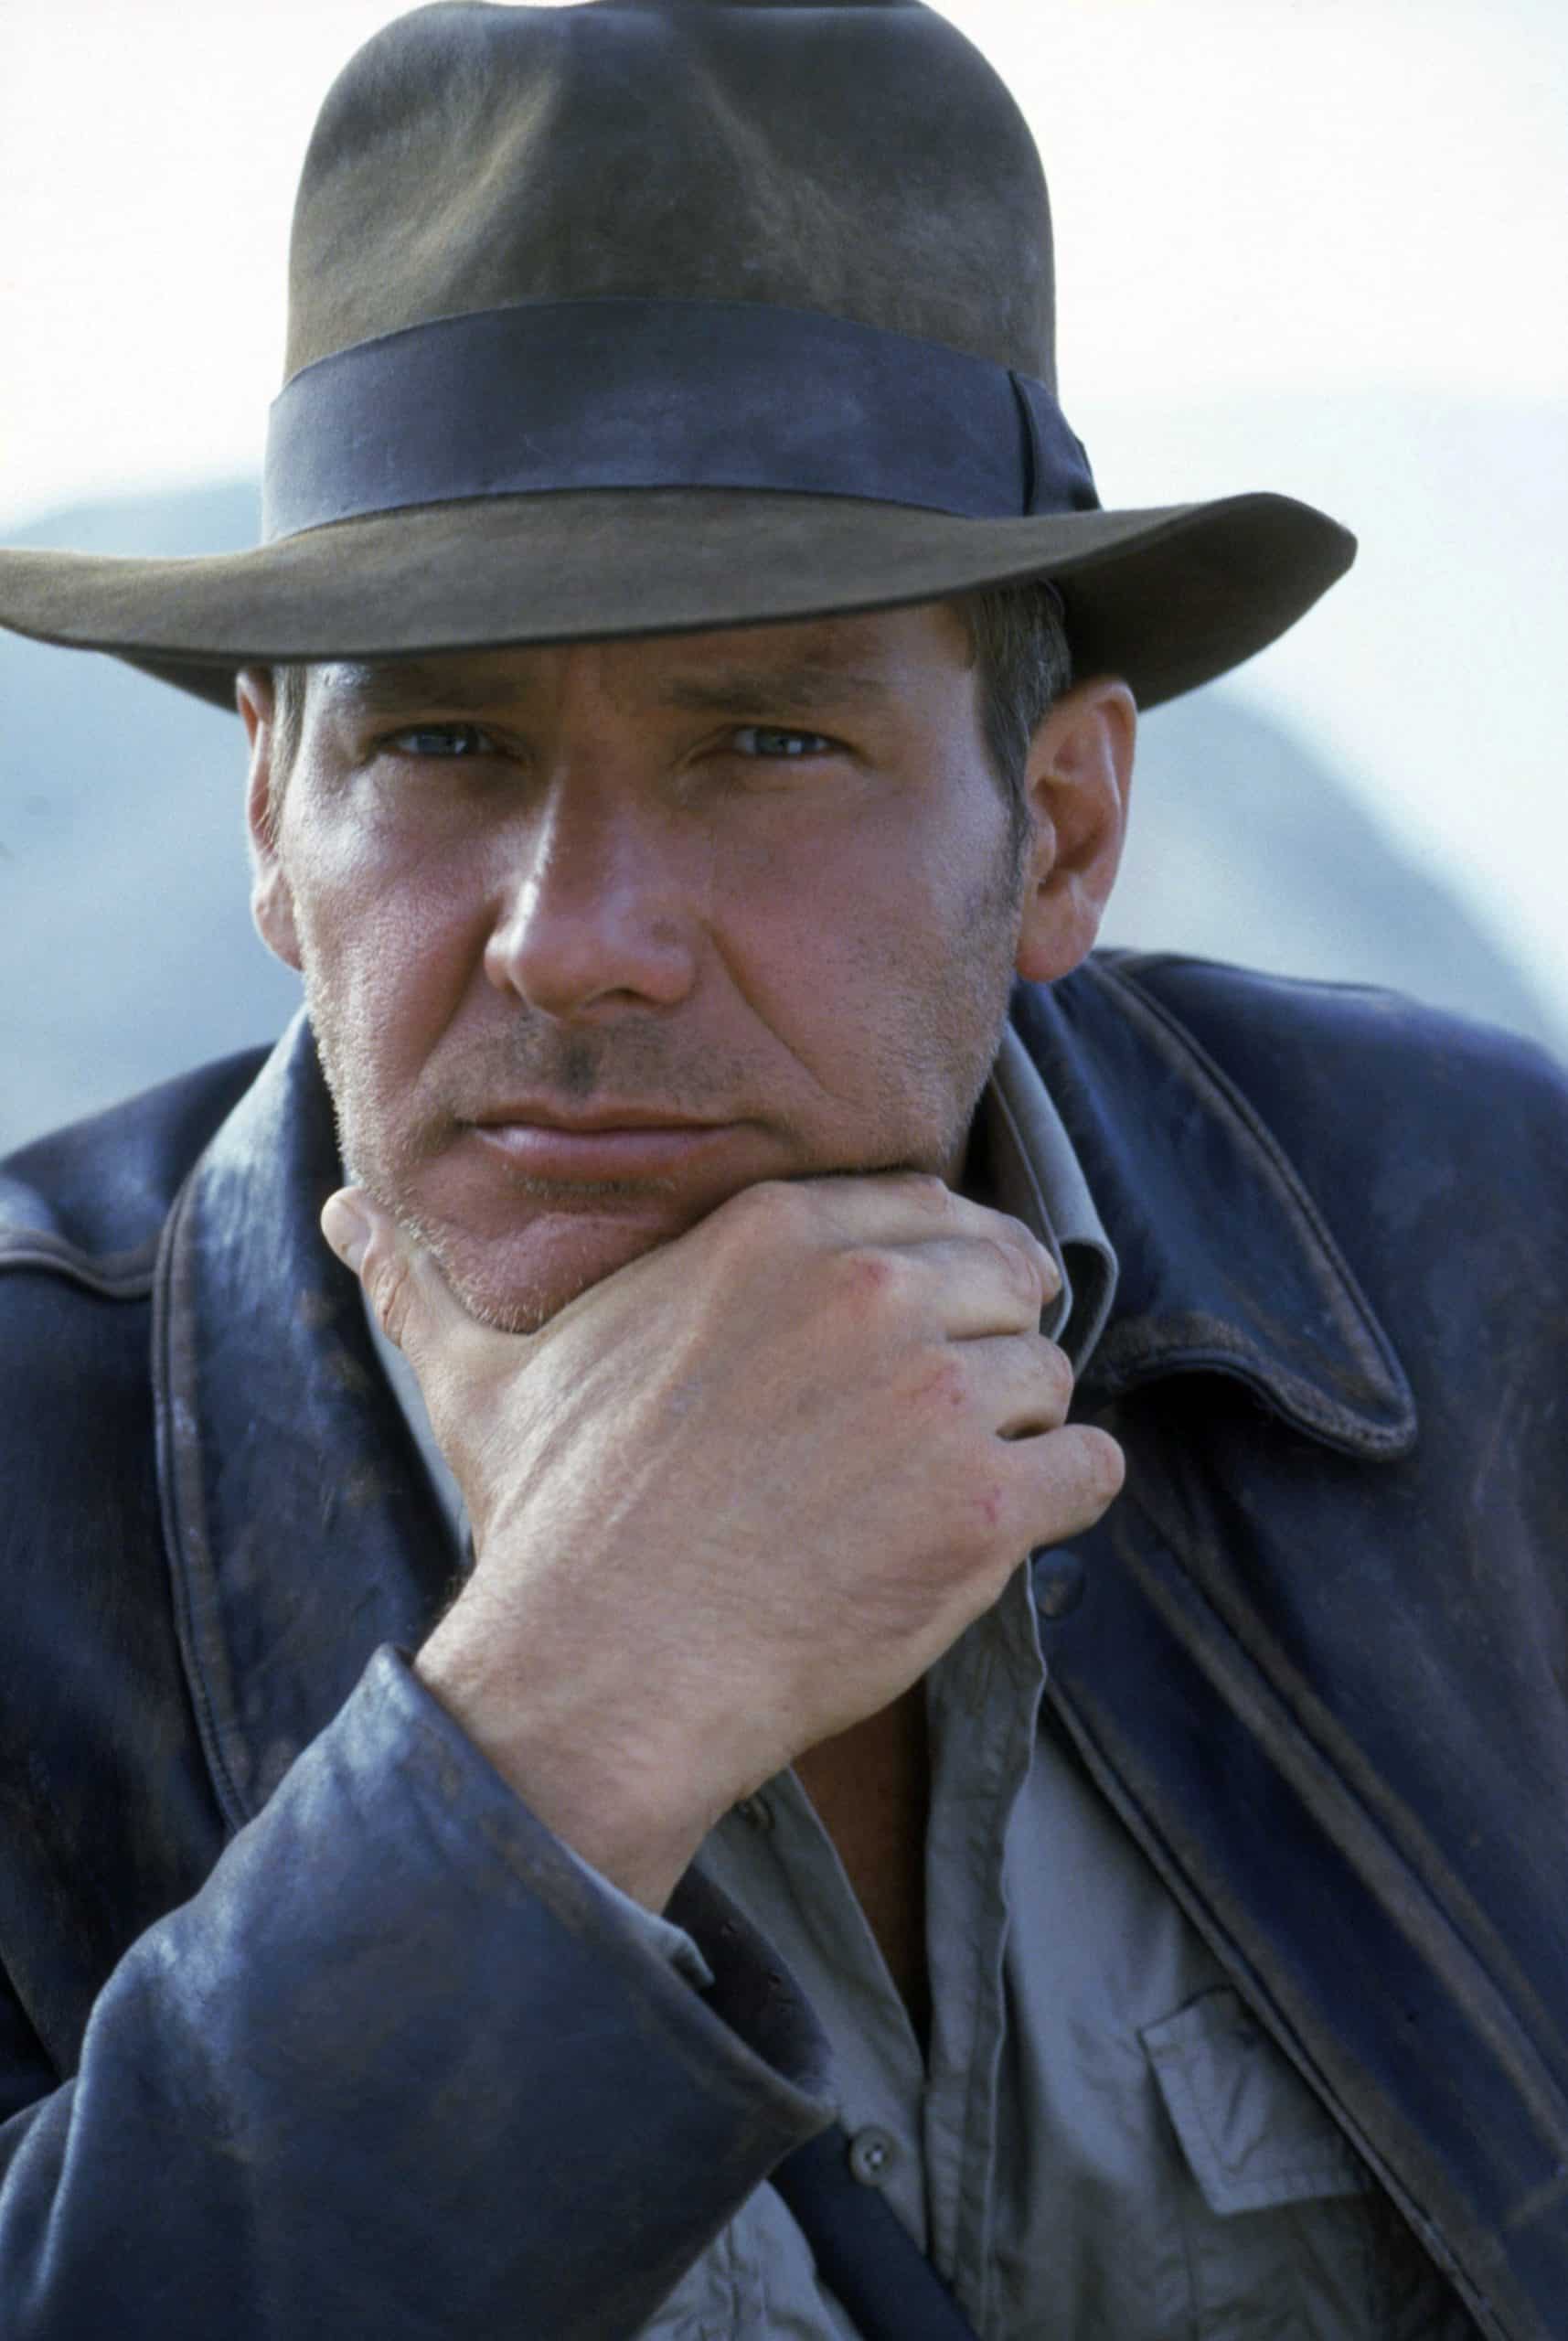 INDIANA JONES AND THE LAST CRUSADE, Harrison Ford as Indiana Jones, 1989